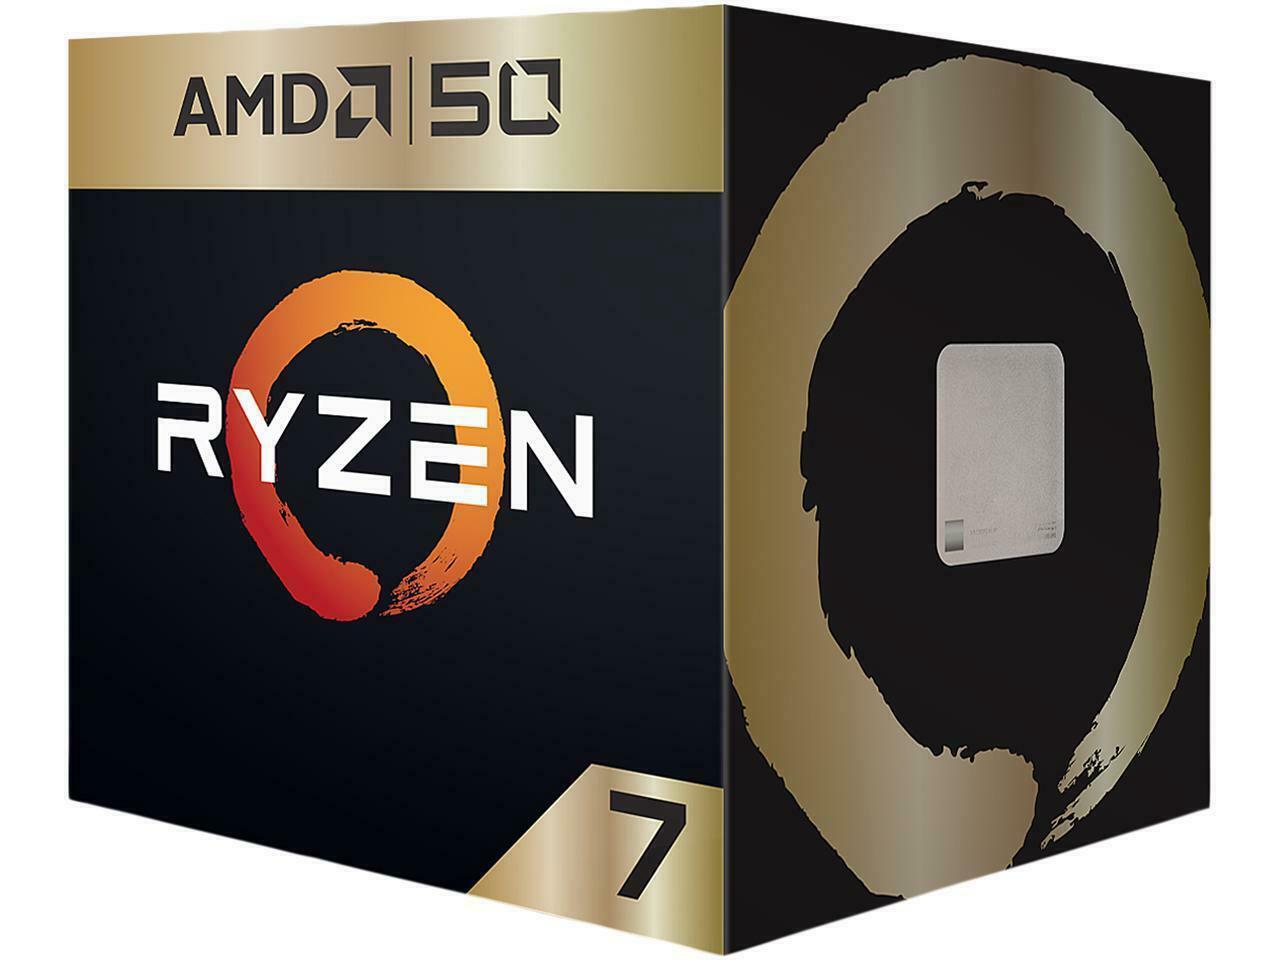 AMD Ryzen 7 2700X Gold Limited Edition,8 Core, 16 Thread, 4.3GHz - AM4 CPU - Store 974 | ستور ٩٧٤